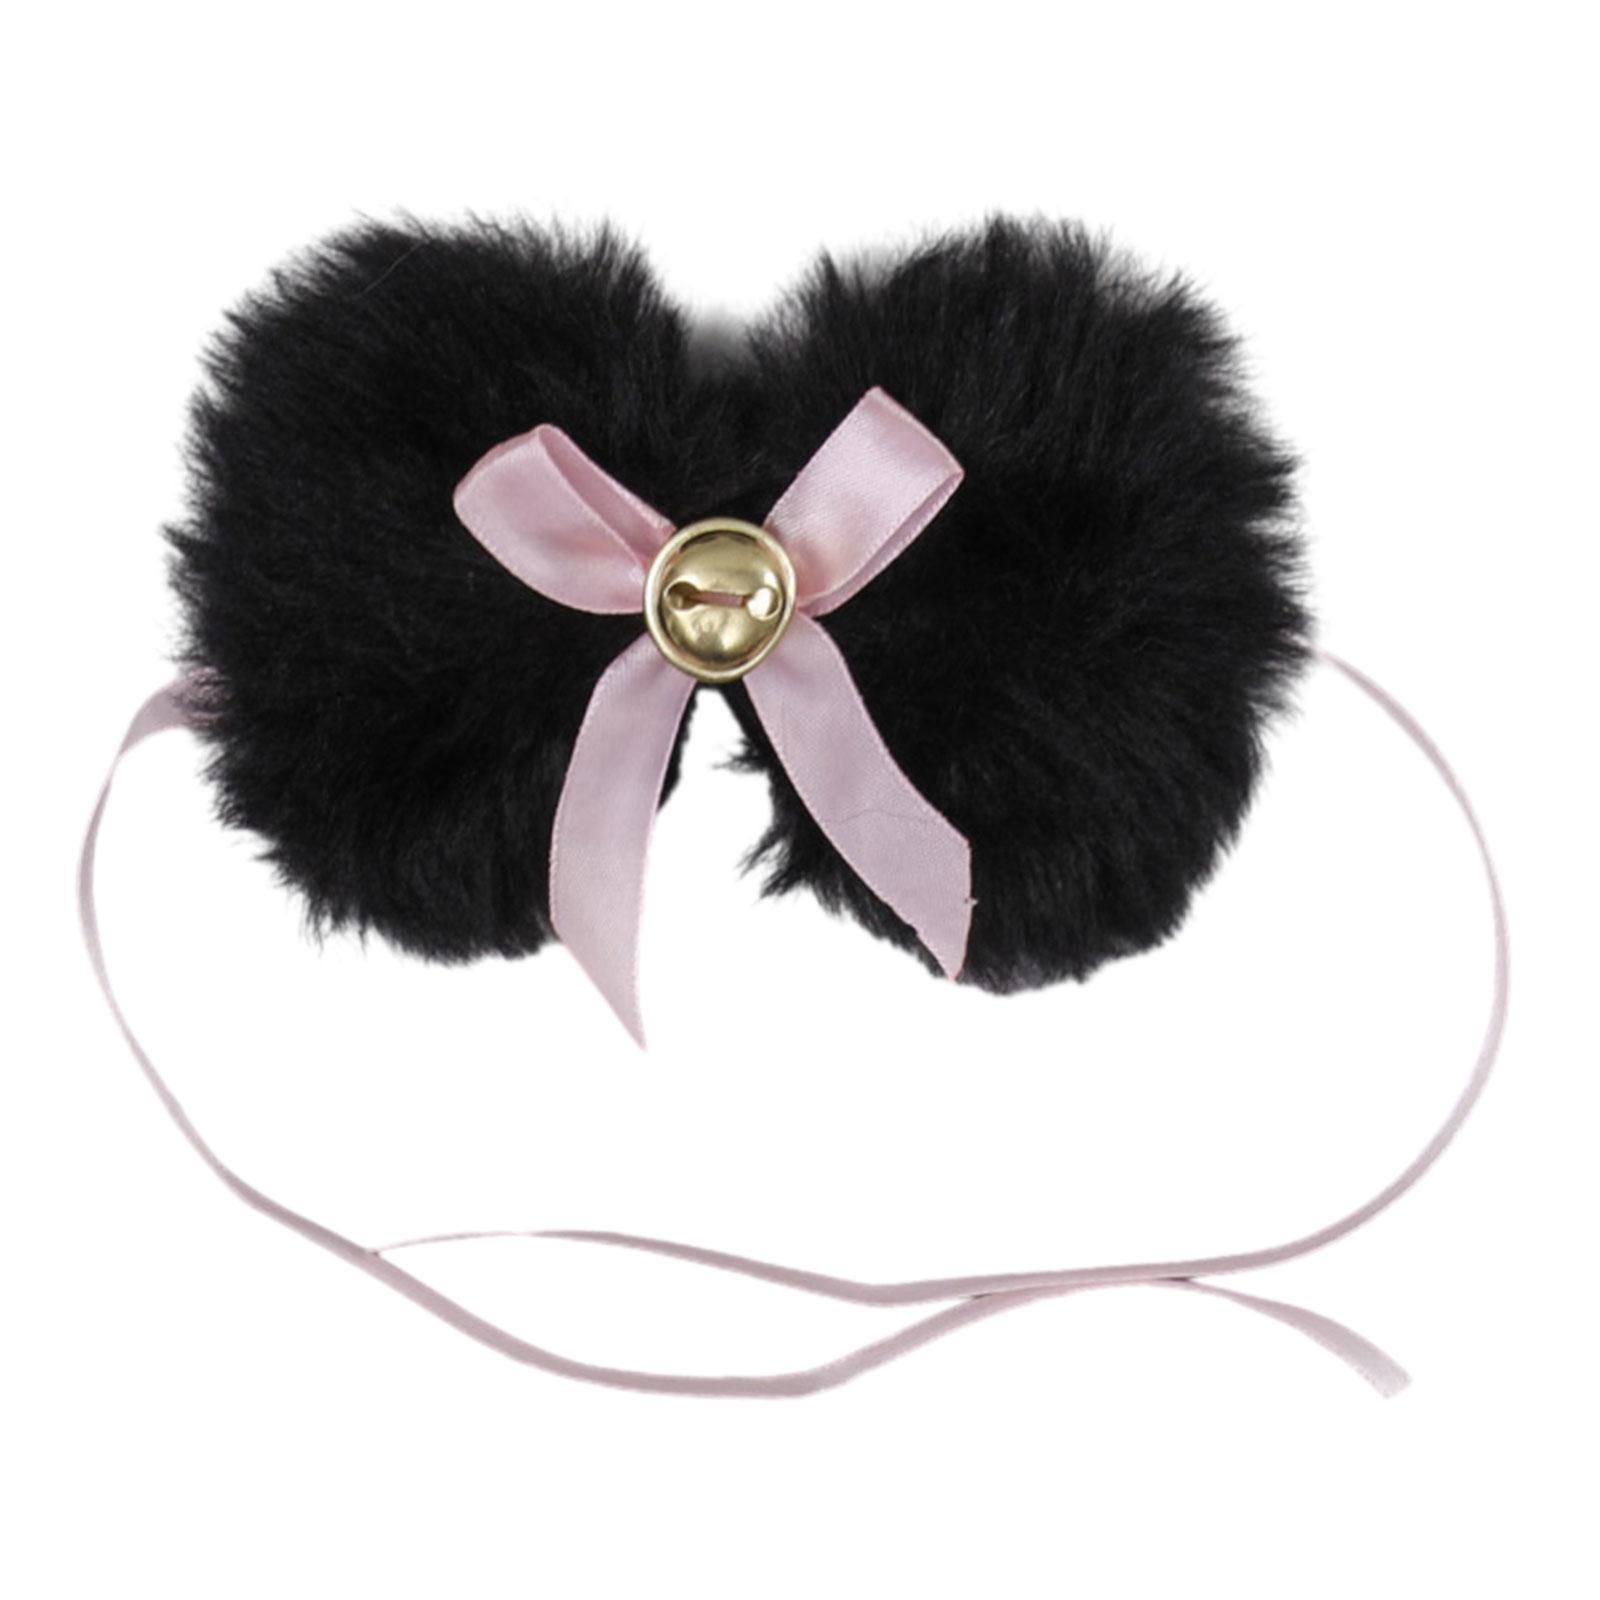 Bell Choker for Women Furry Bowknot Costume Accessory Cravat Lolita Neck Bow